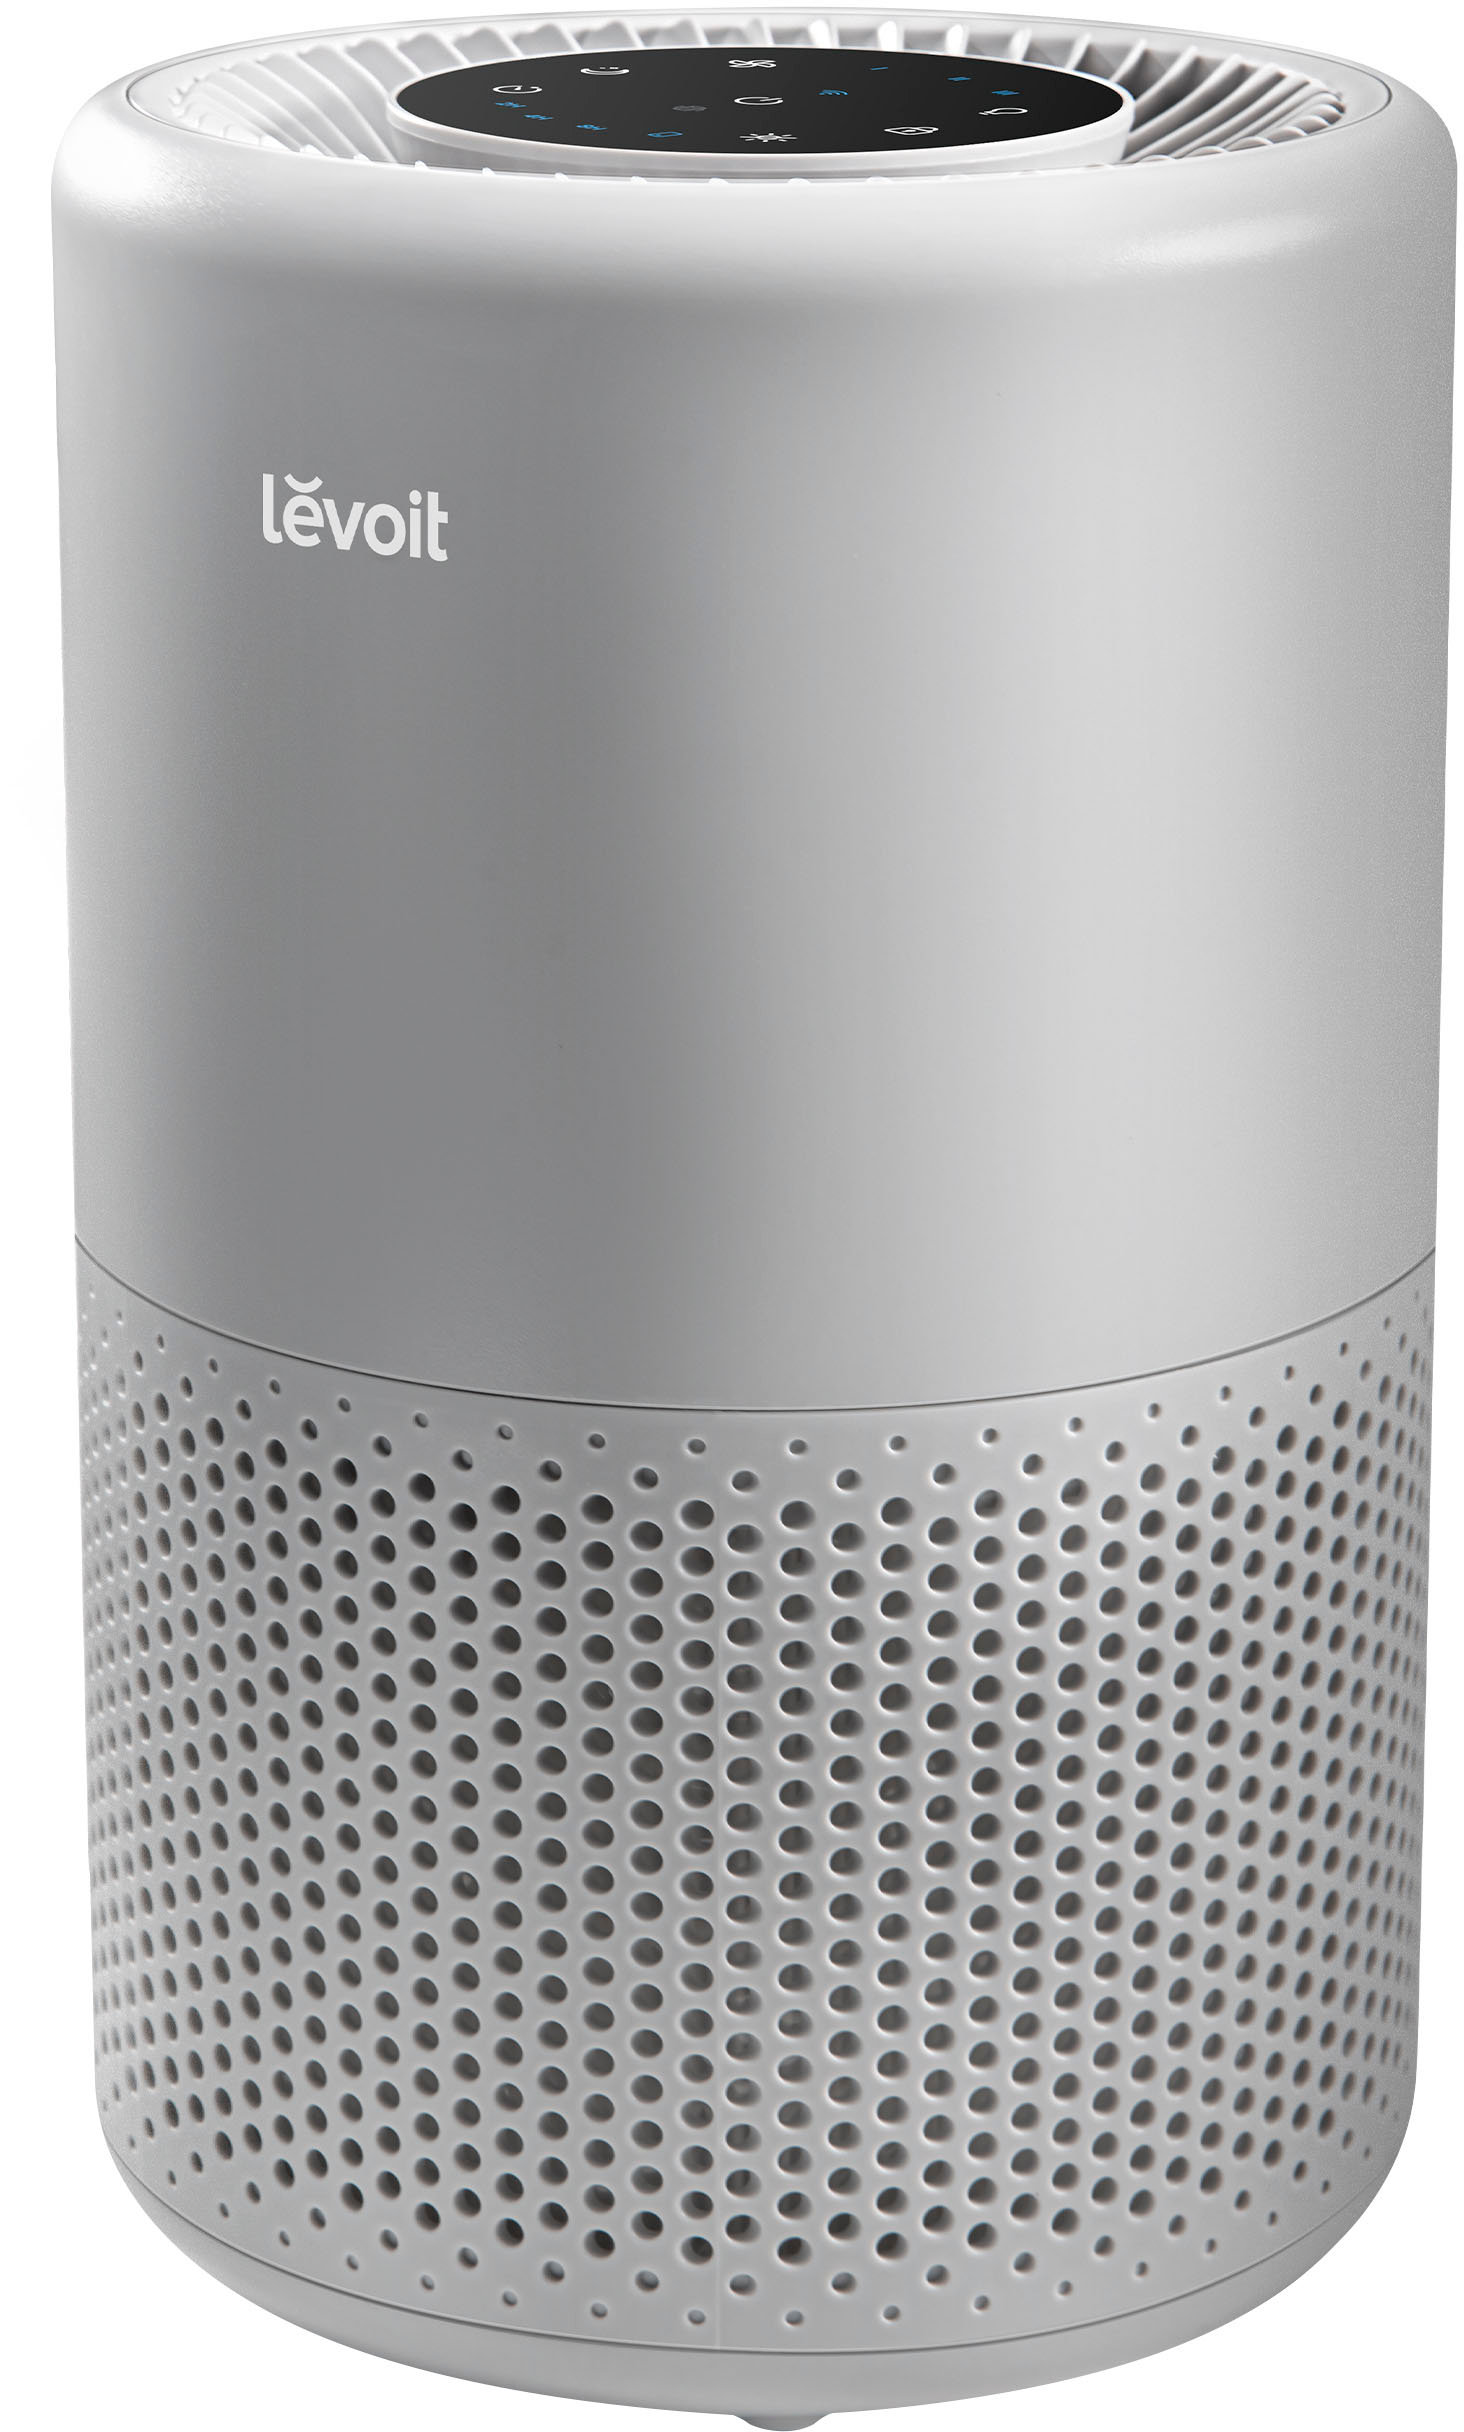 Levoit Core 200S Vs Core 300S – Do We Have a Worthy Successor? 